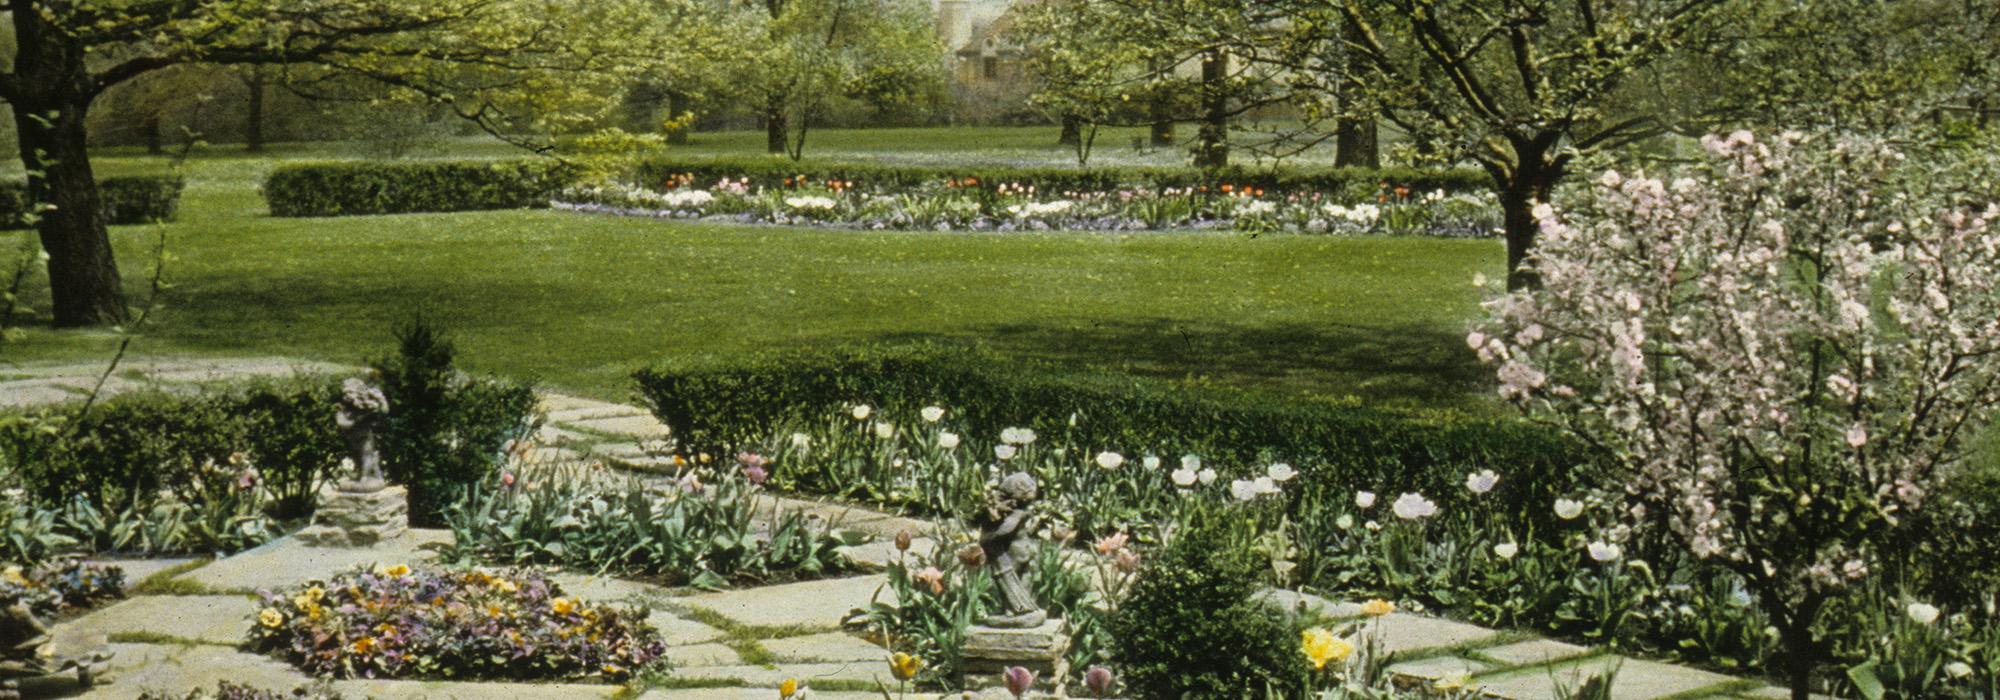 Welles Garden, Winnetka, Illinois